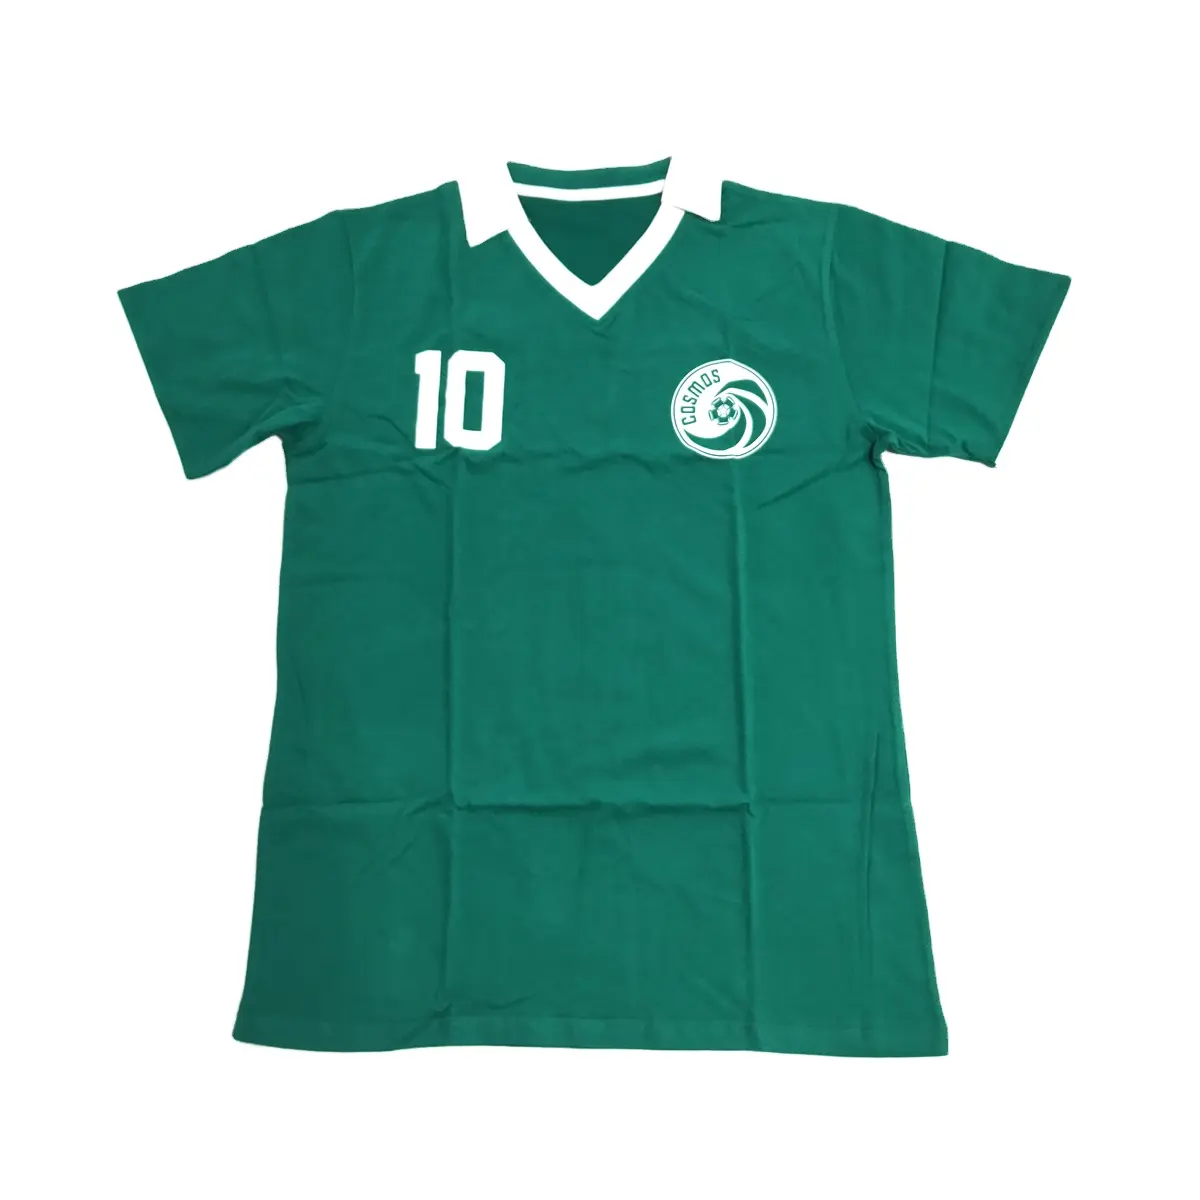 Factory price latest football jersey designs soccer uniform